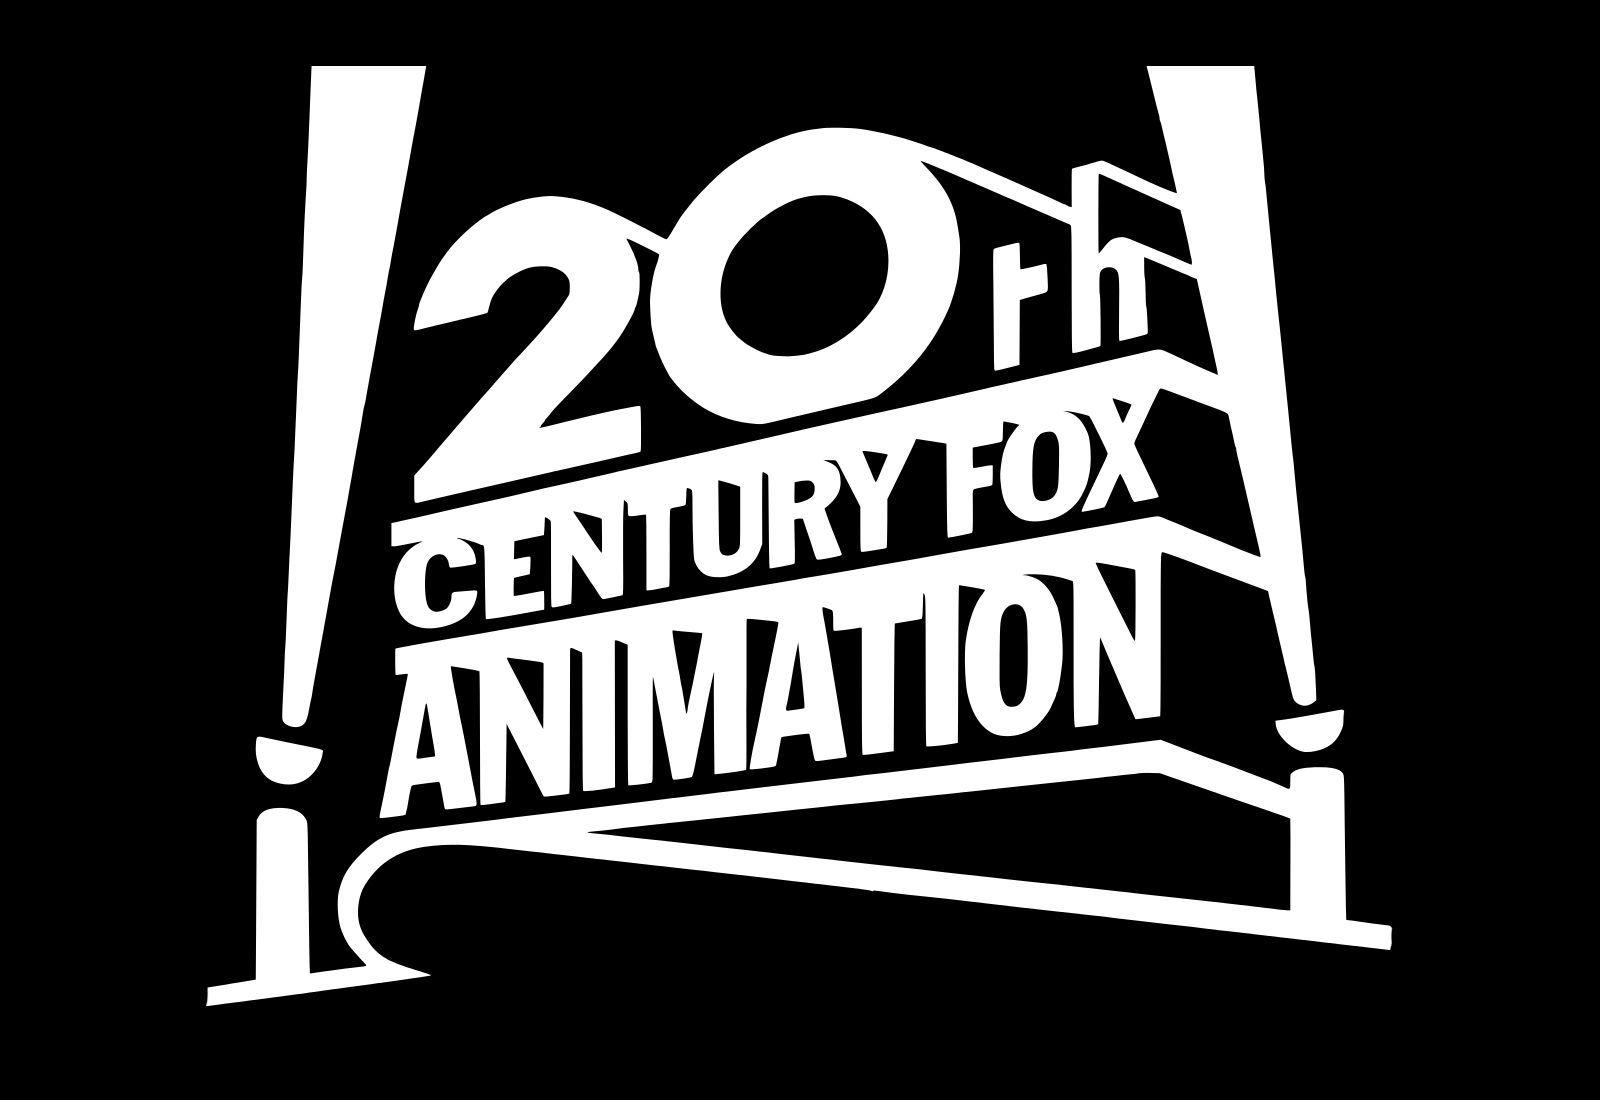 Century Fox Logo - 20th century fox television logo | All logos world | Logos, Fox logo ...